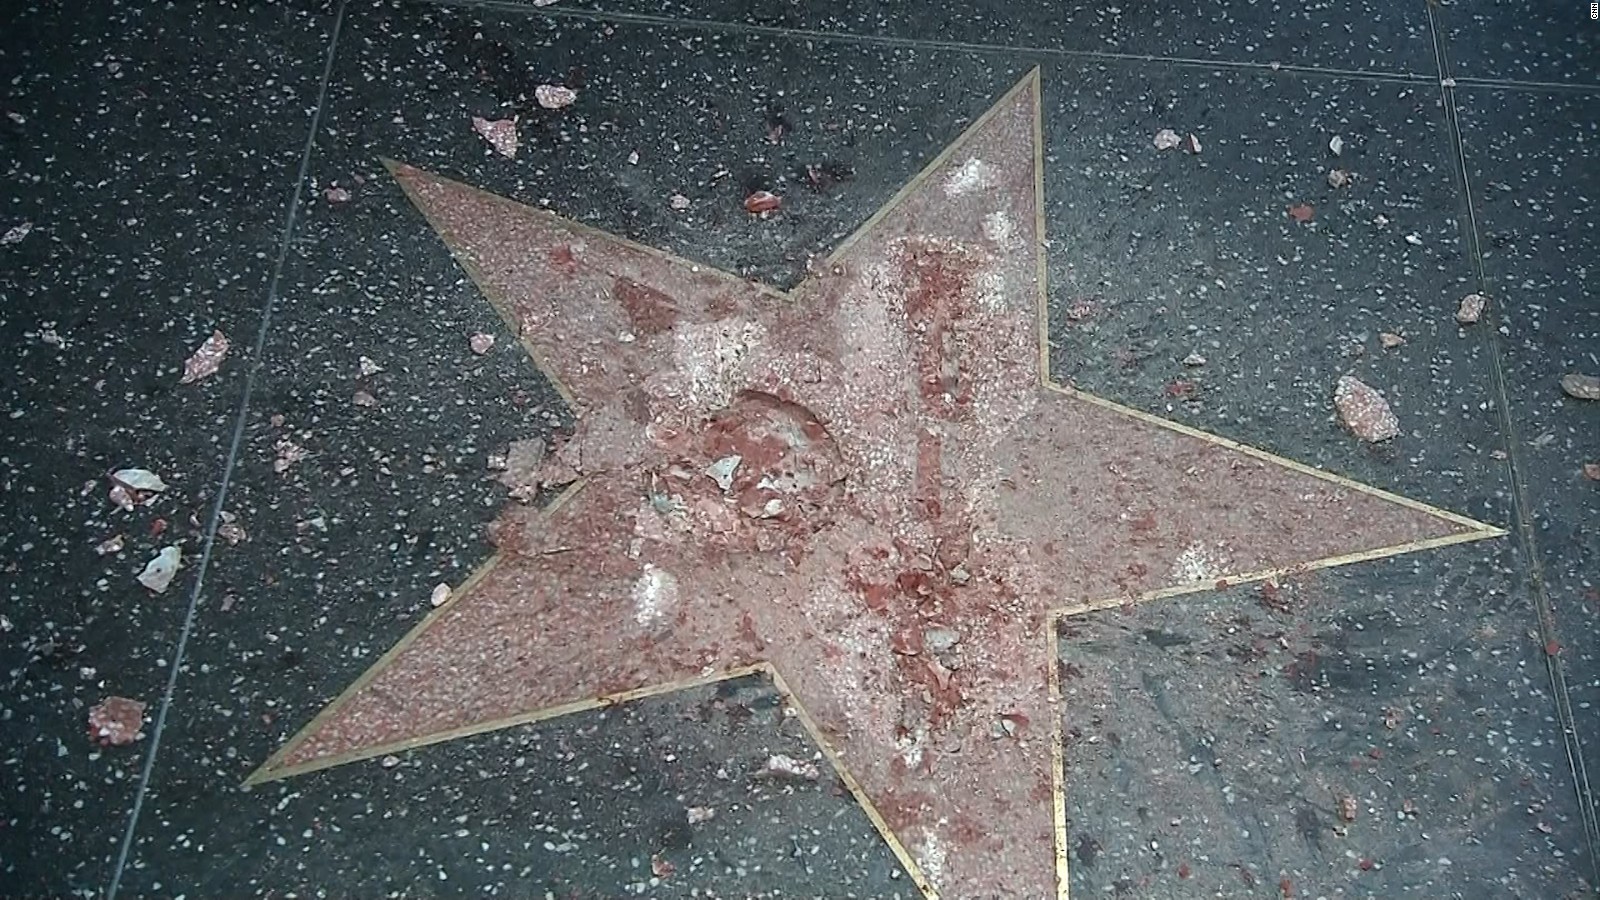 Donald Trump star vandalized; LAPD investigating - CNNPolitics